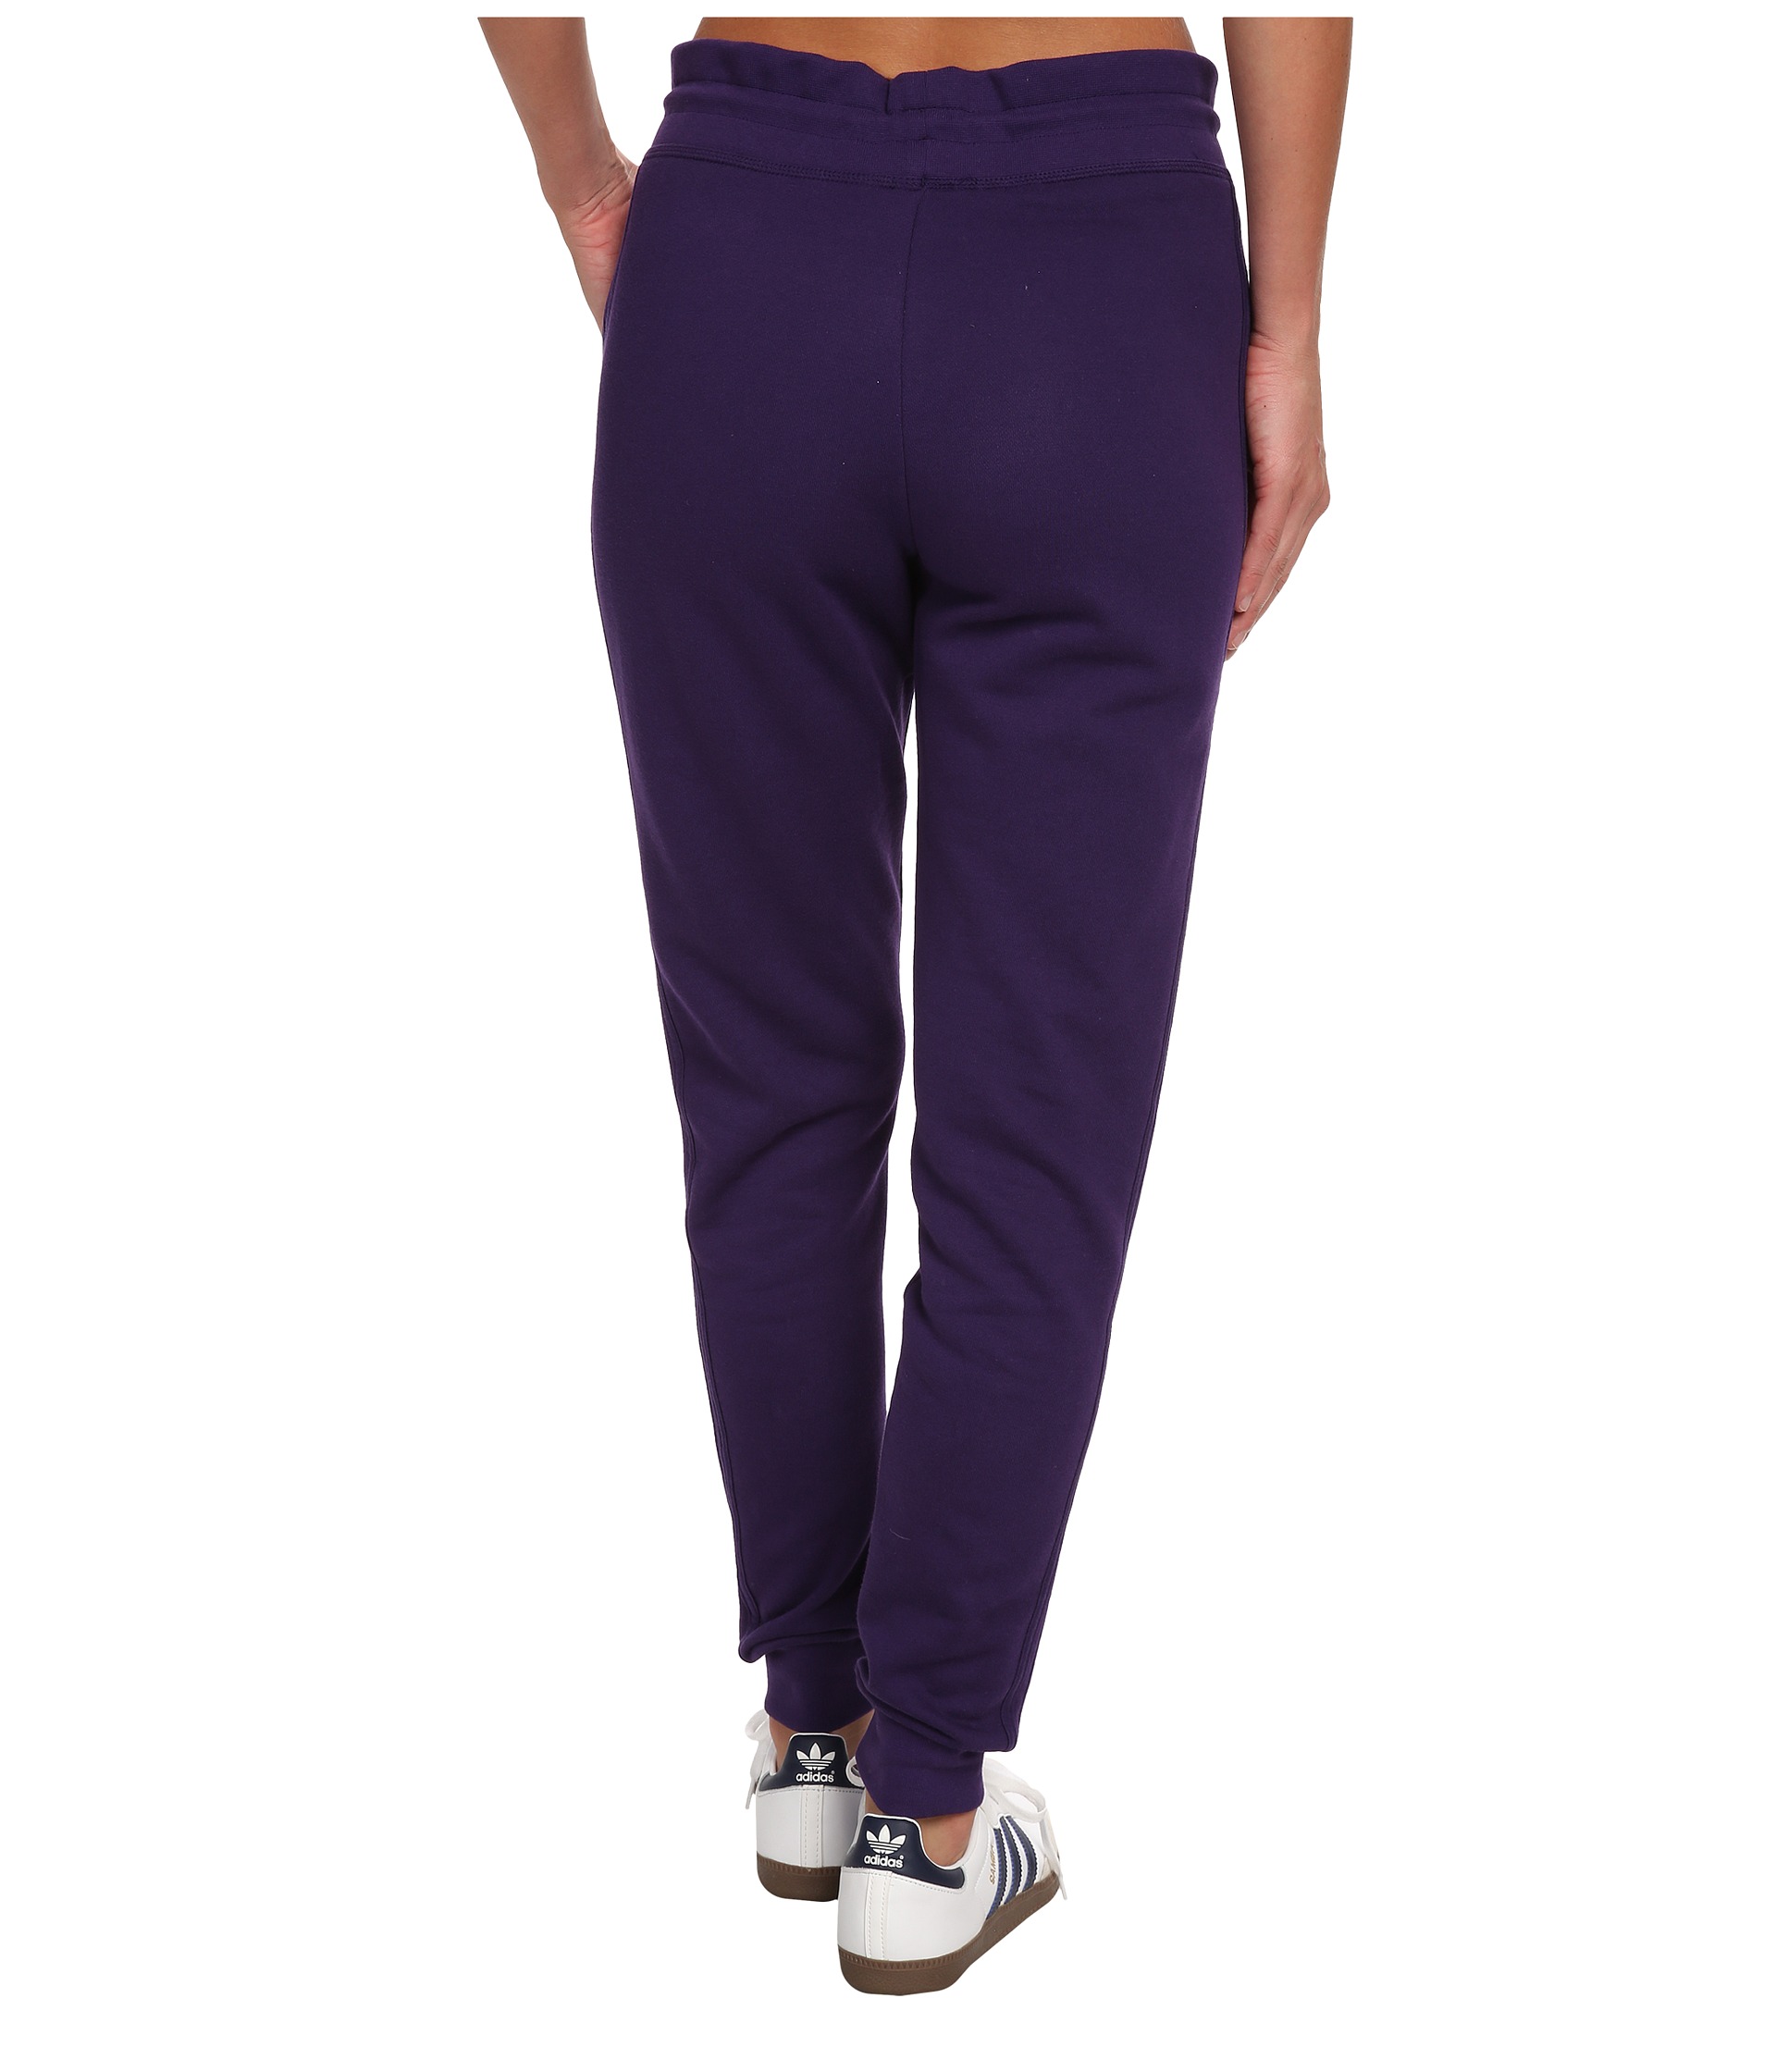 Adidas Originals Cuffed Slim Track Pant Dark Purple | Shipped Free at ...